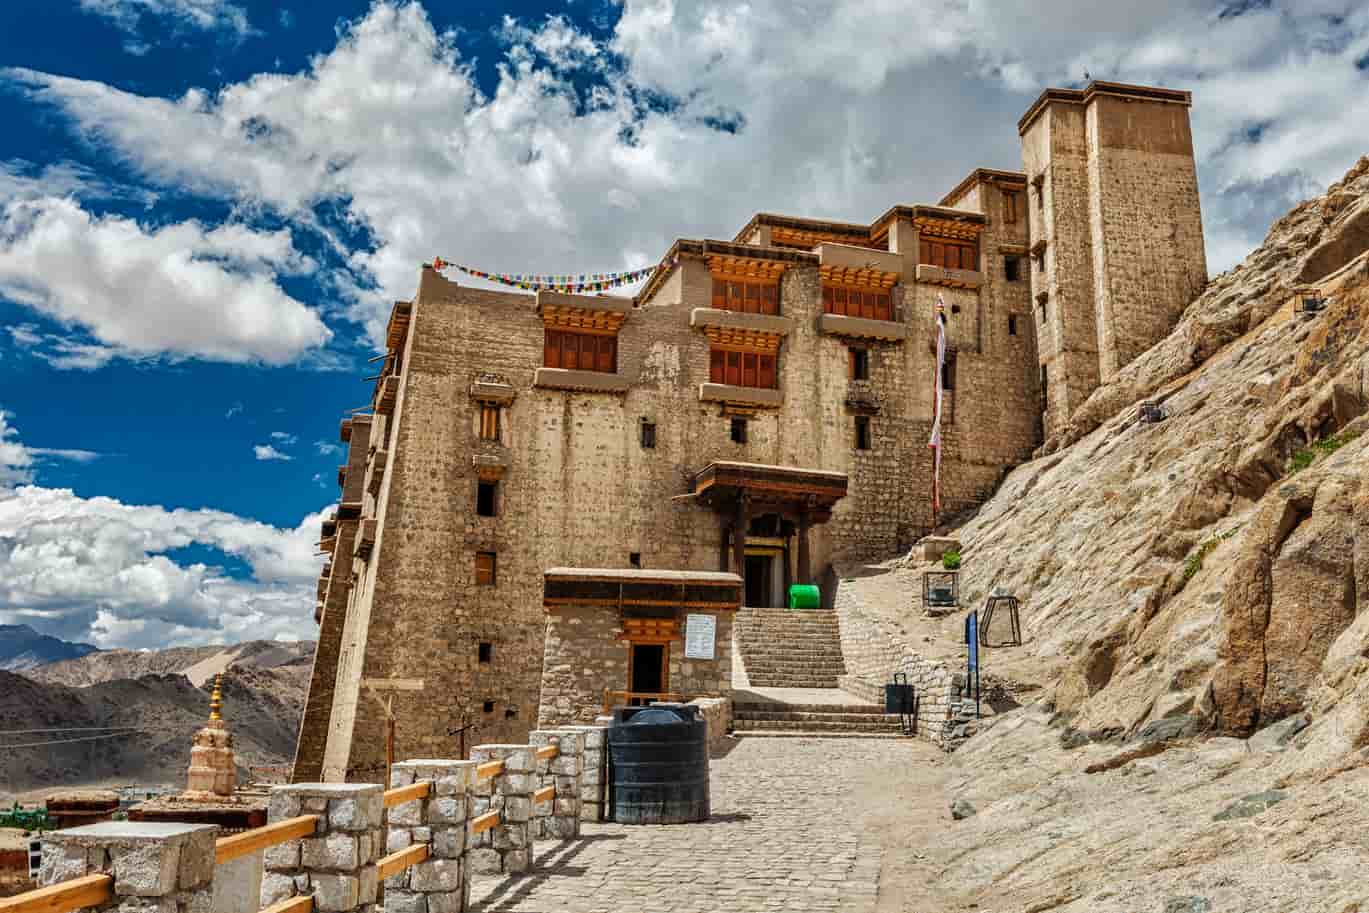 ladakh tourism office in delhi